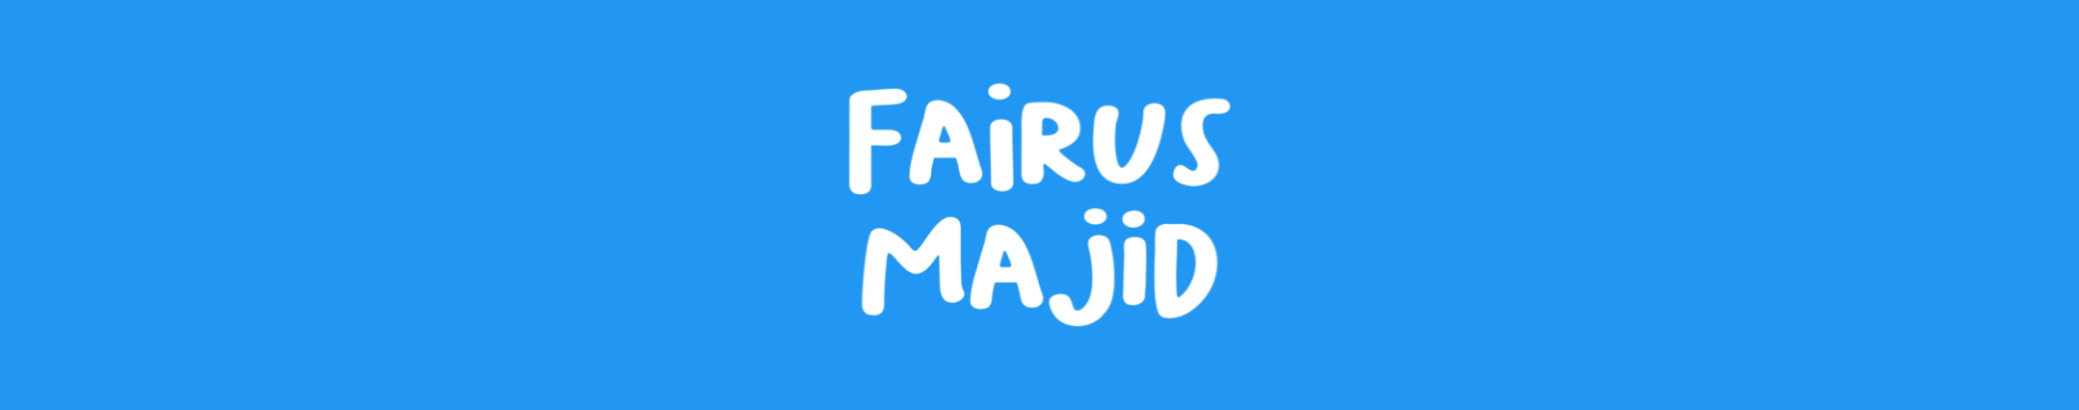 Muhammad Fairus Majid's profile banner